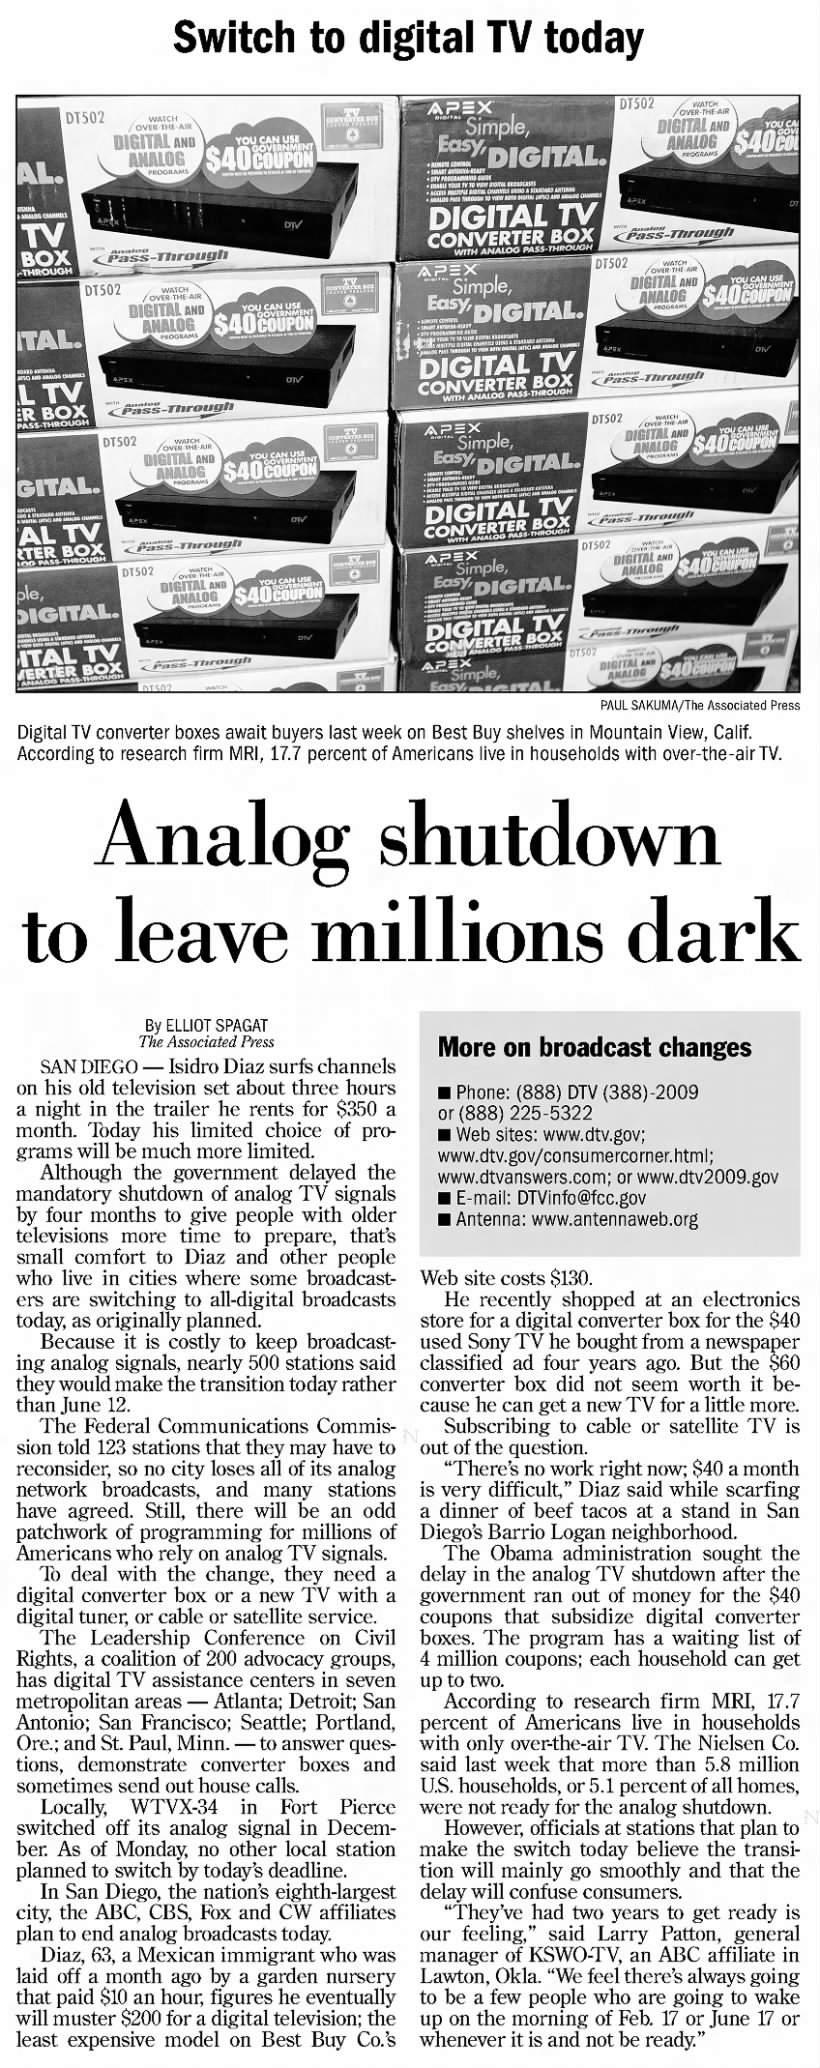 Analog shutdown to leave millions dark